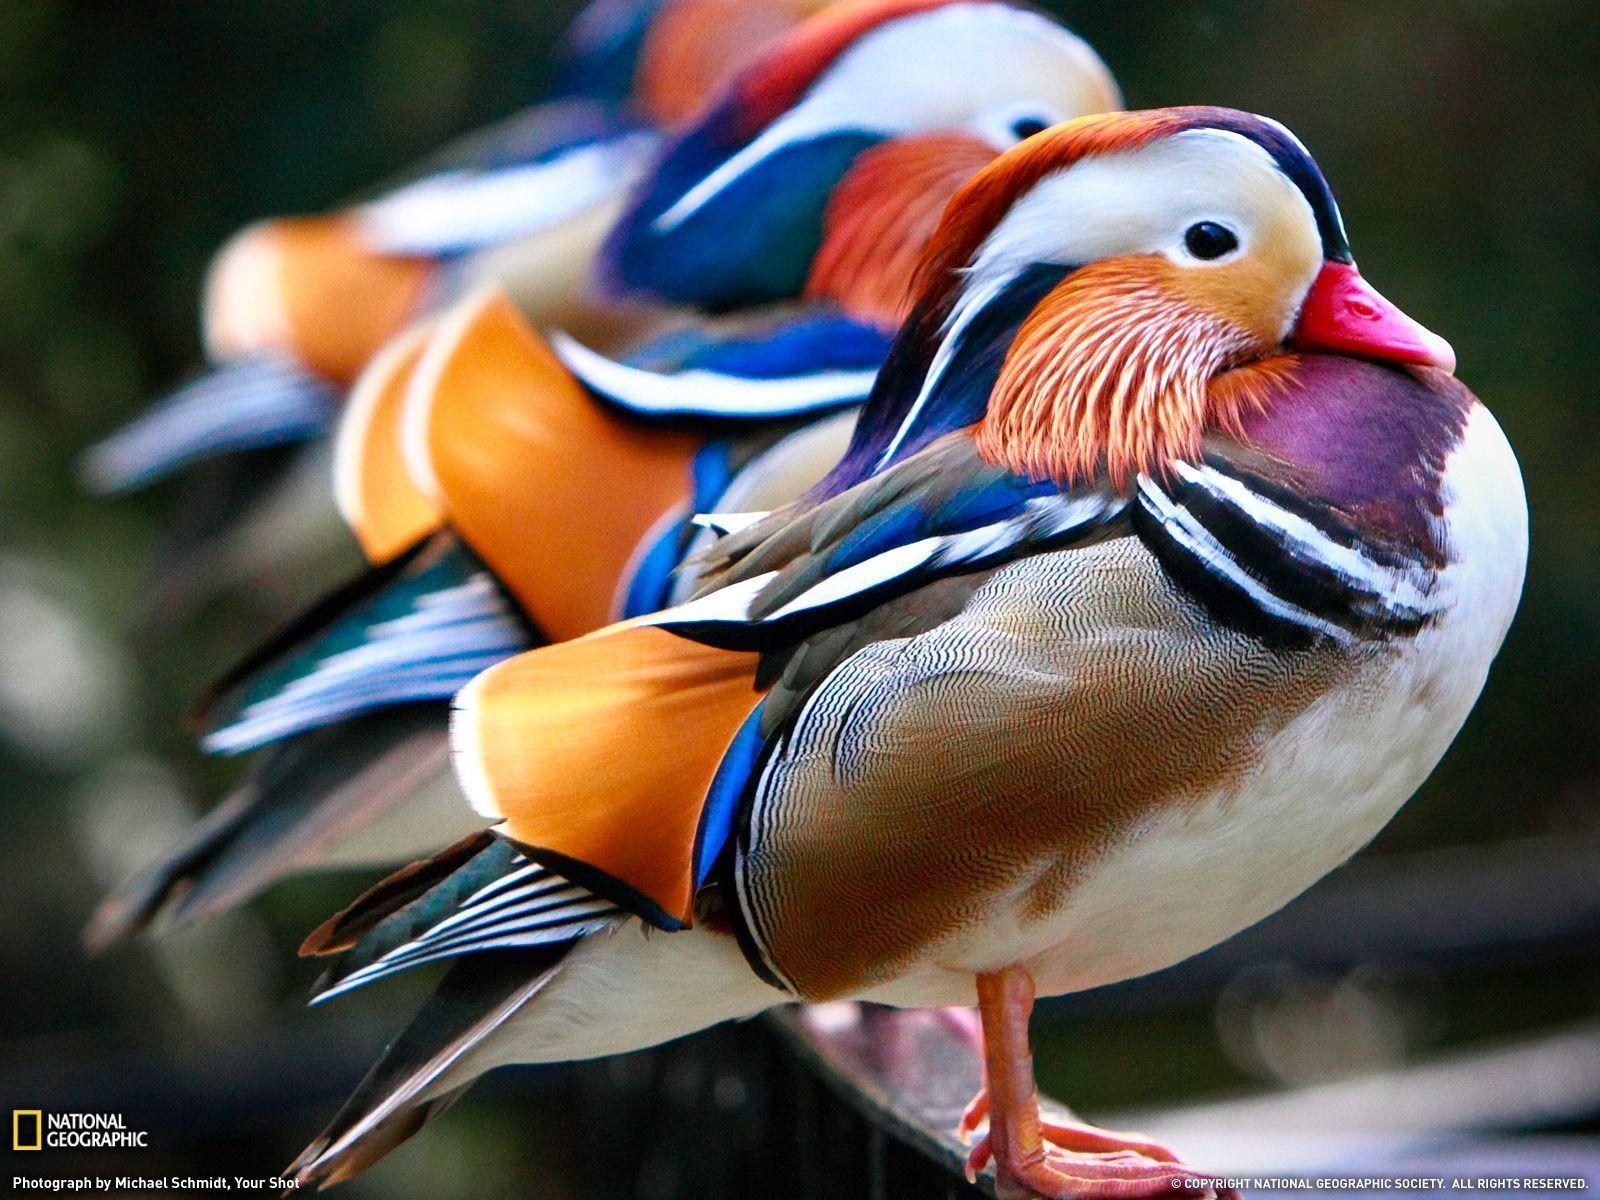 Colored birds desktop wallpaper. HD Nature Wallpaper